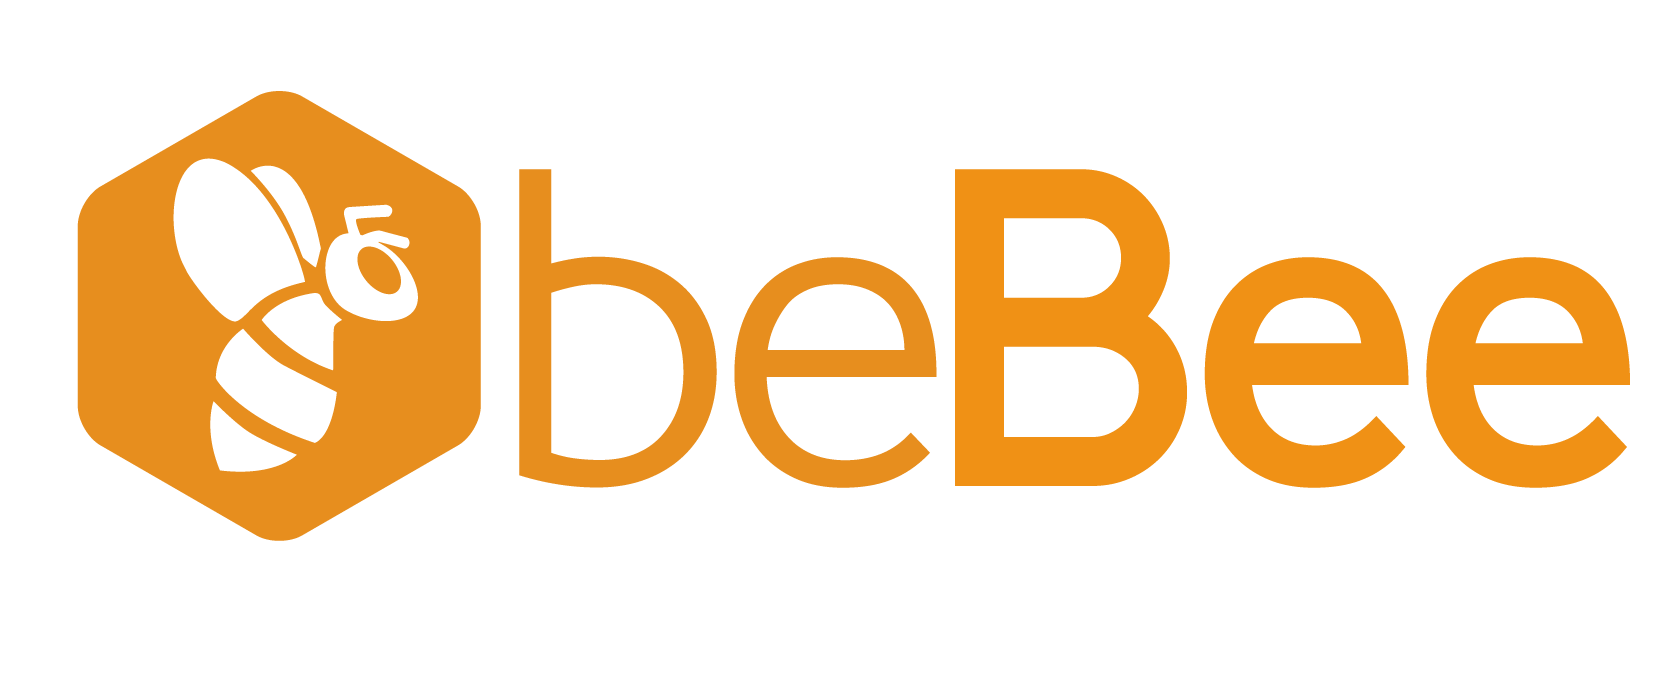 bebee png logo